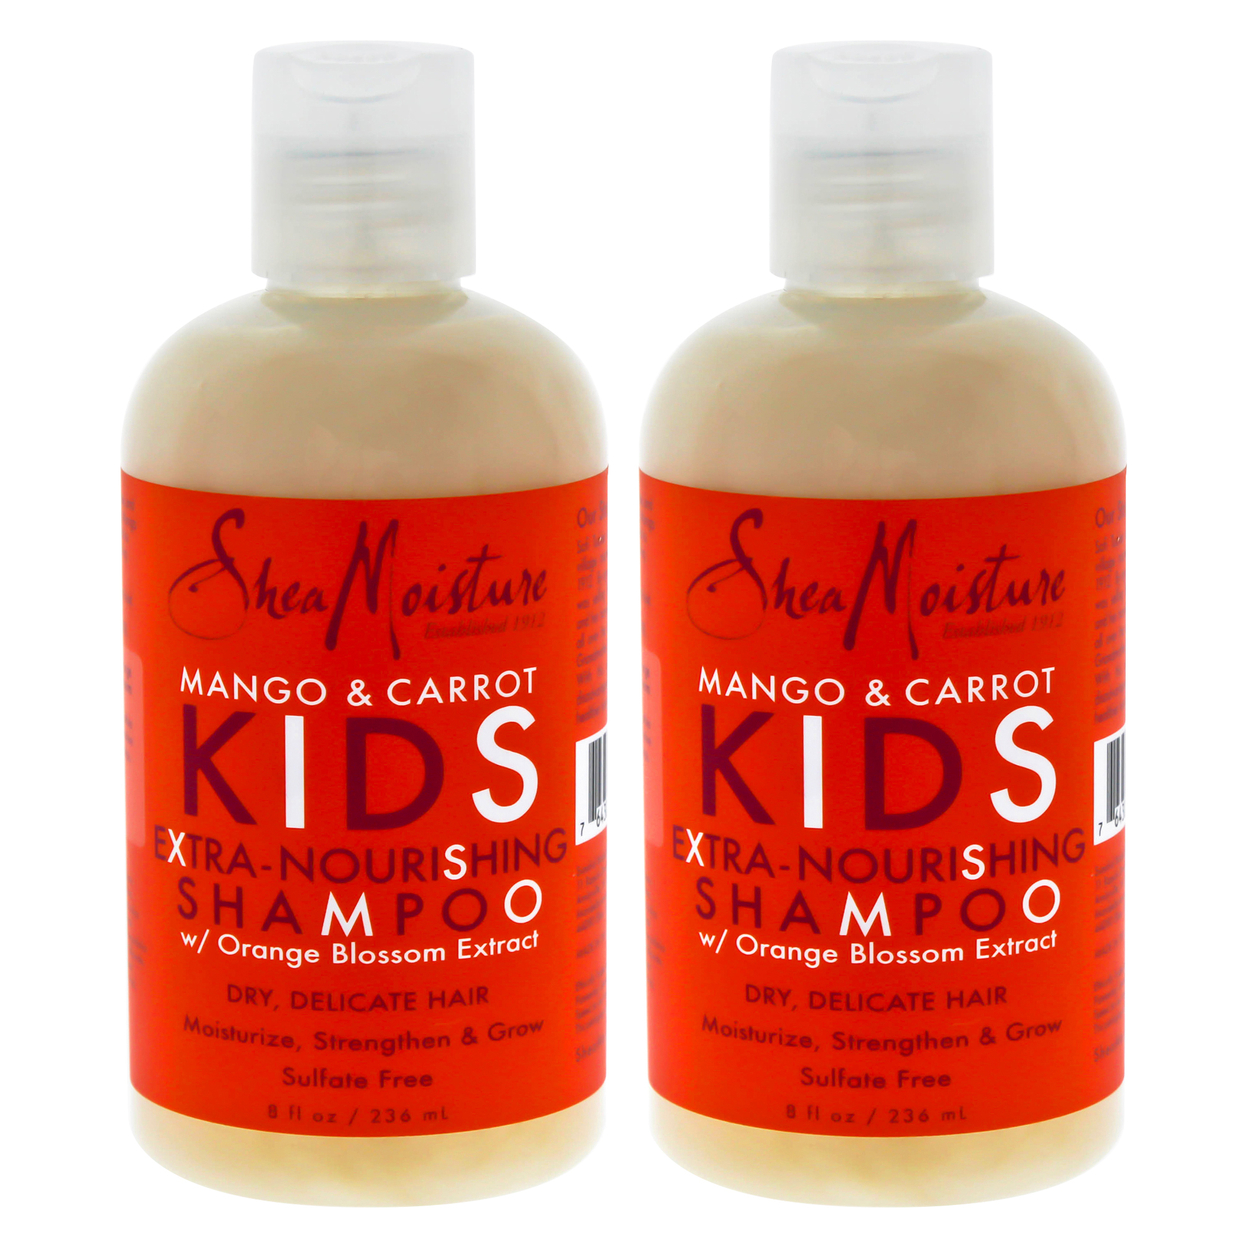 Shea Moisture Mango & Carrot Kids Extra-Nourishing Shampoo - Pack Of 2 8 Oz